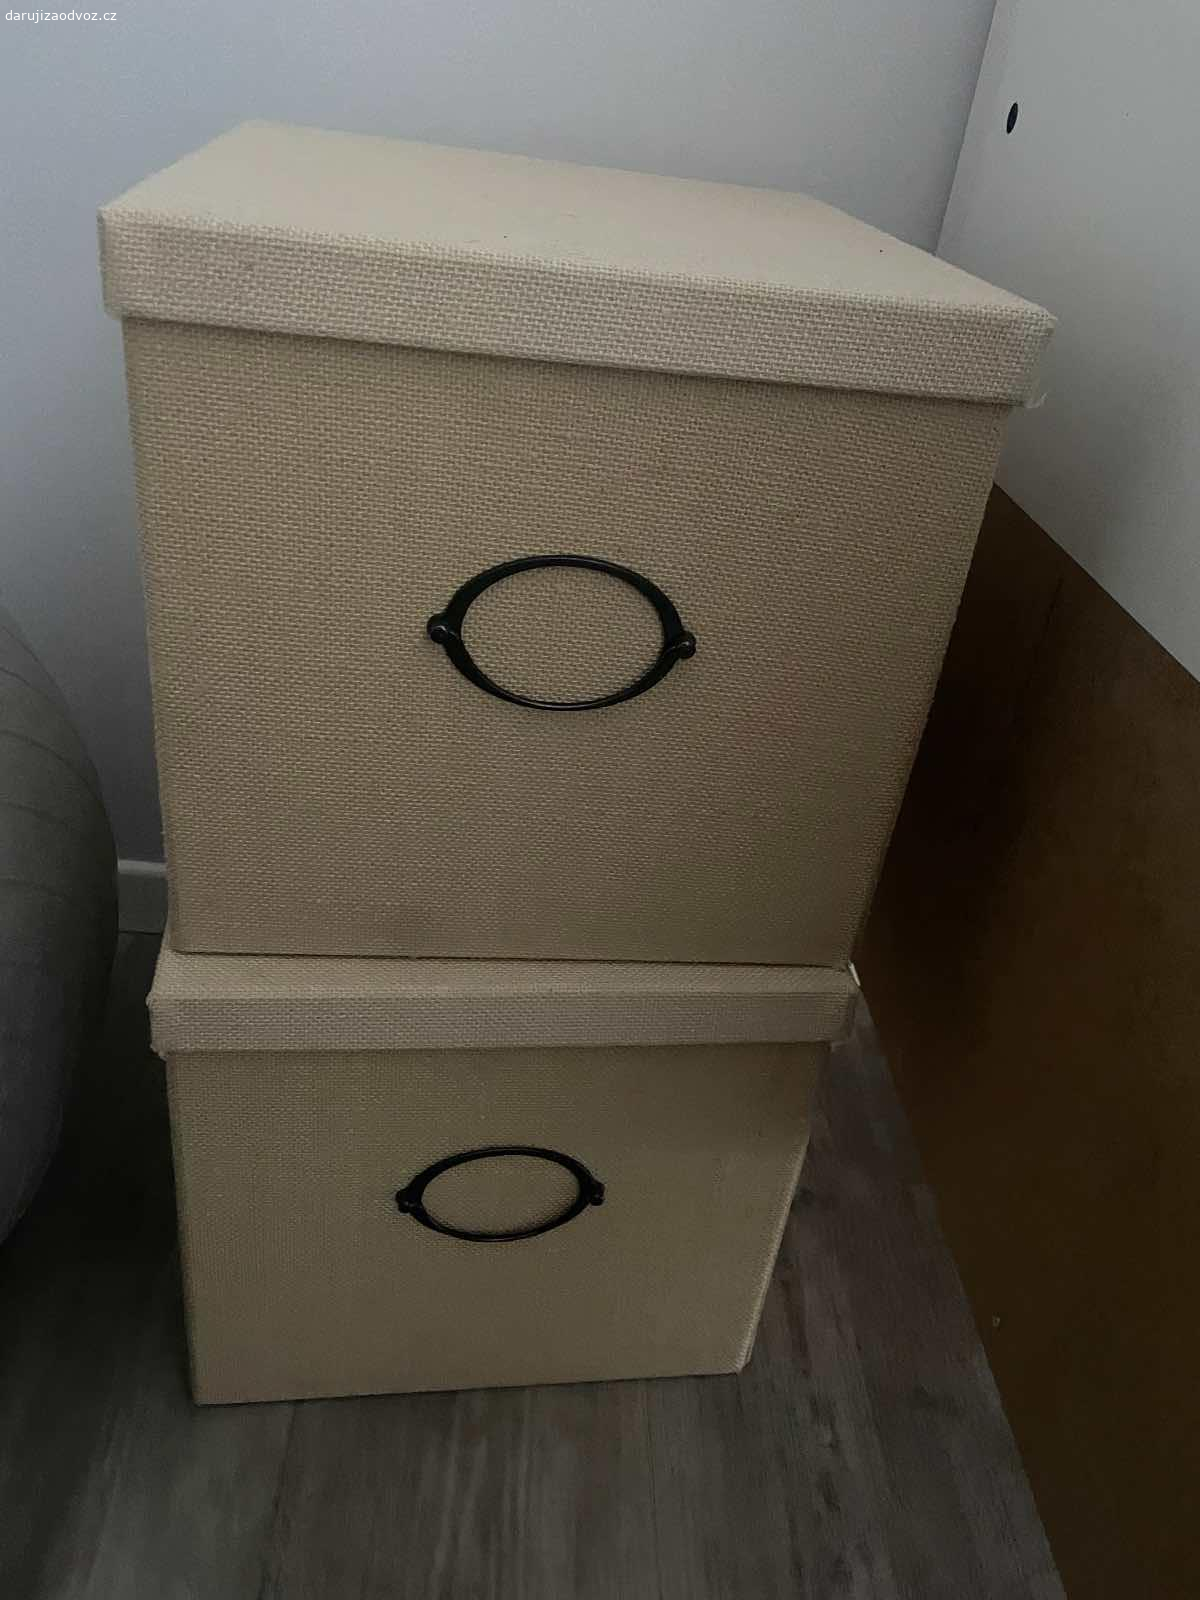 Ikea boxy pouzivane. Dva standardni zachovale Ikea boxy. Za odvoz, postou nelze.